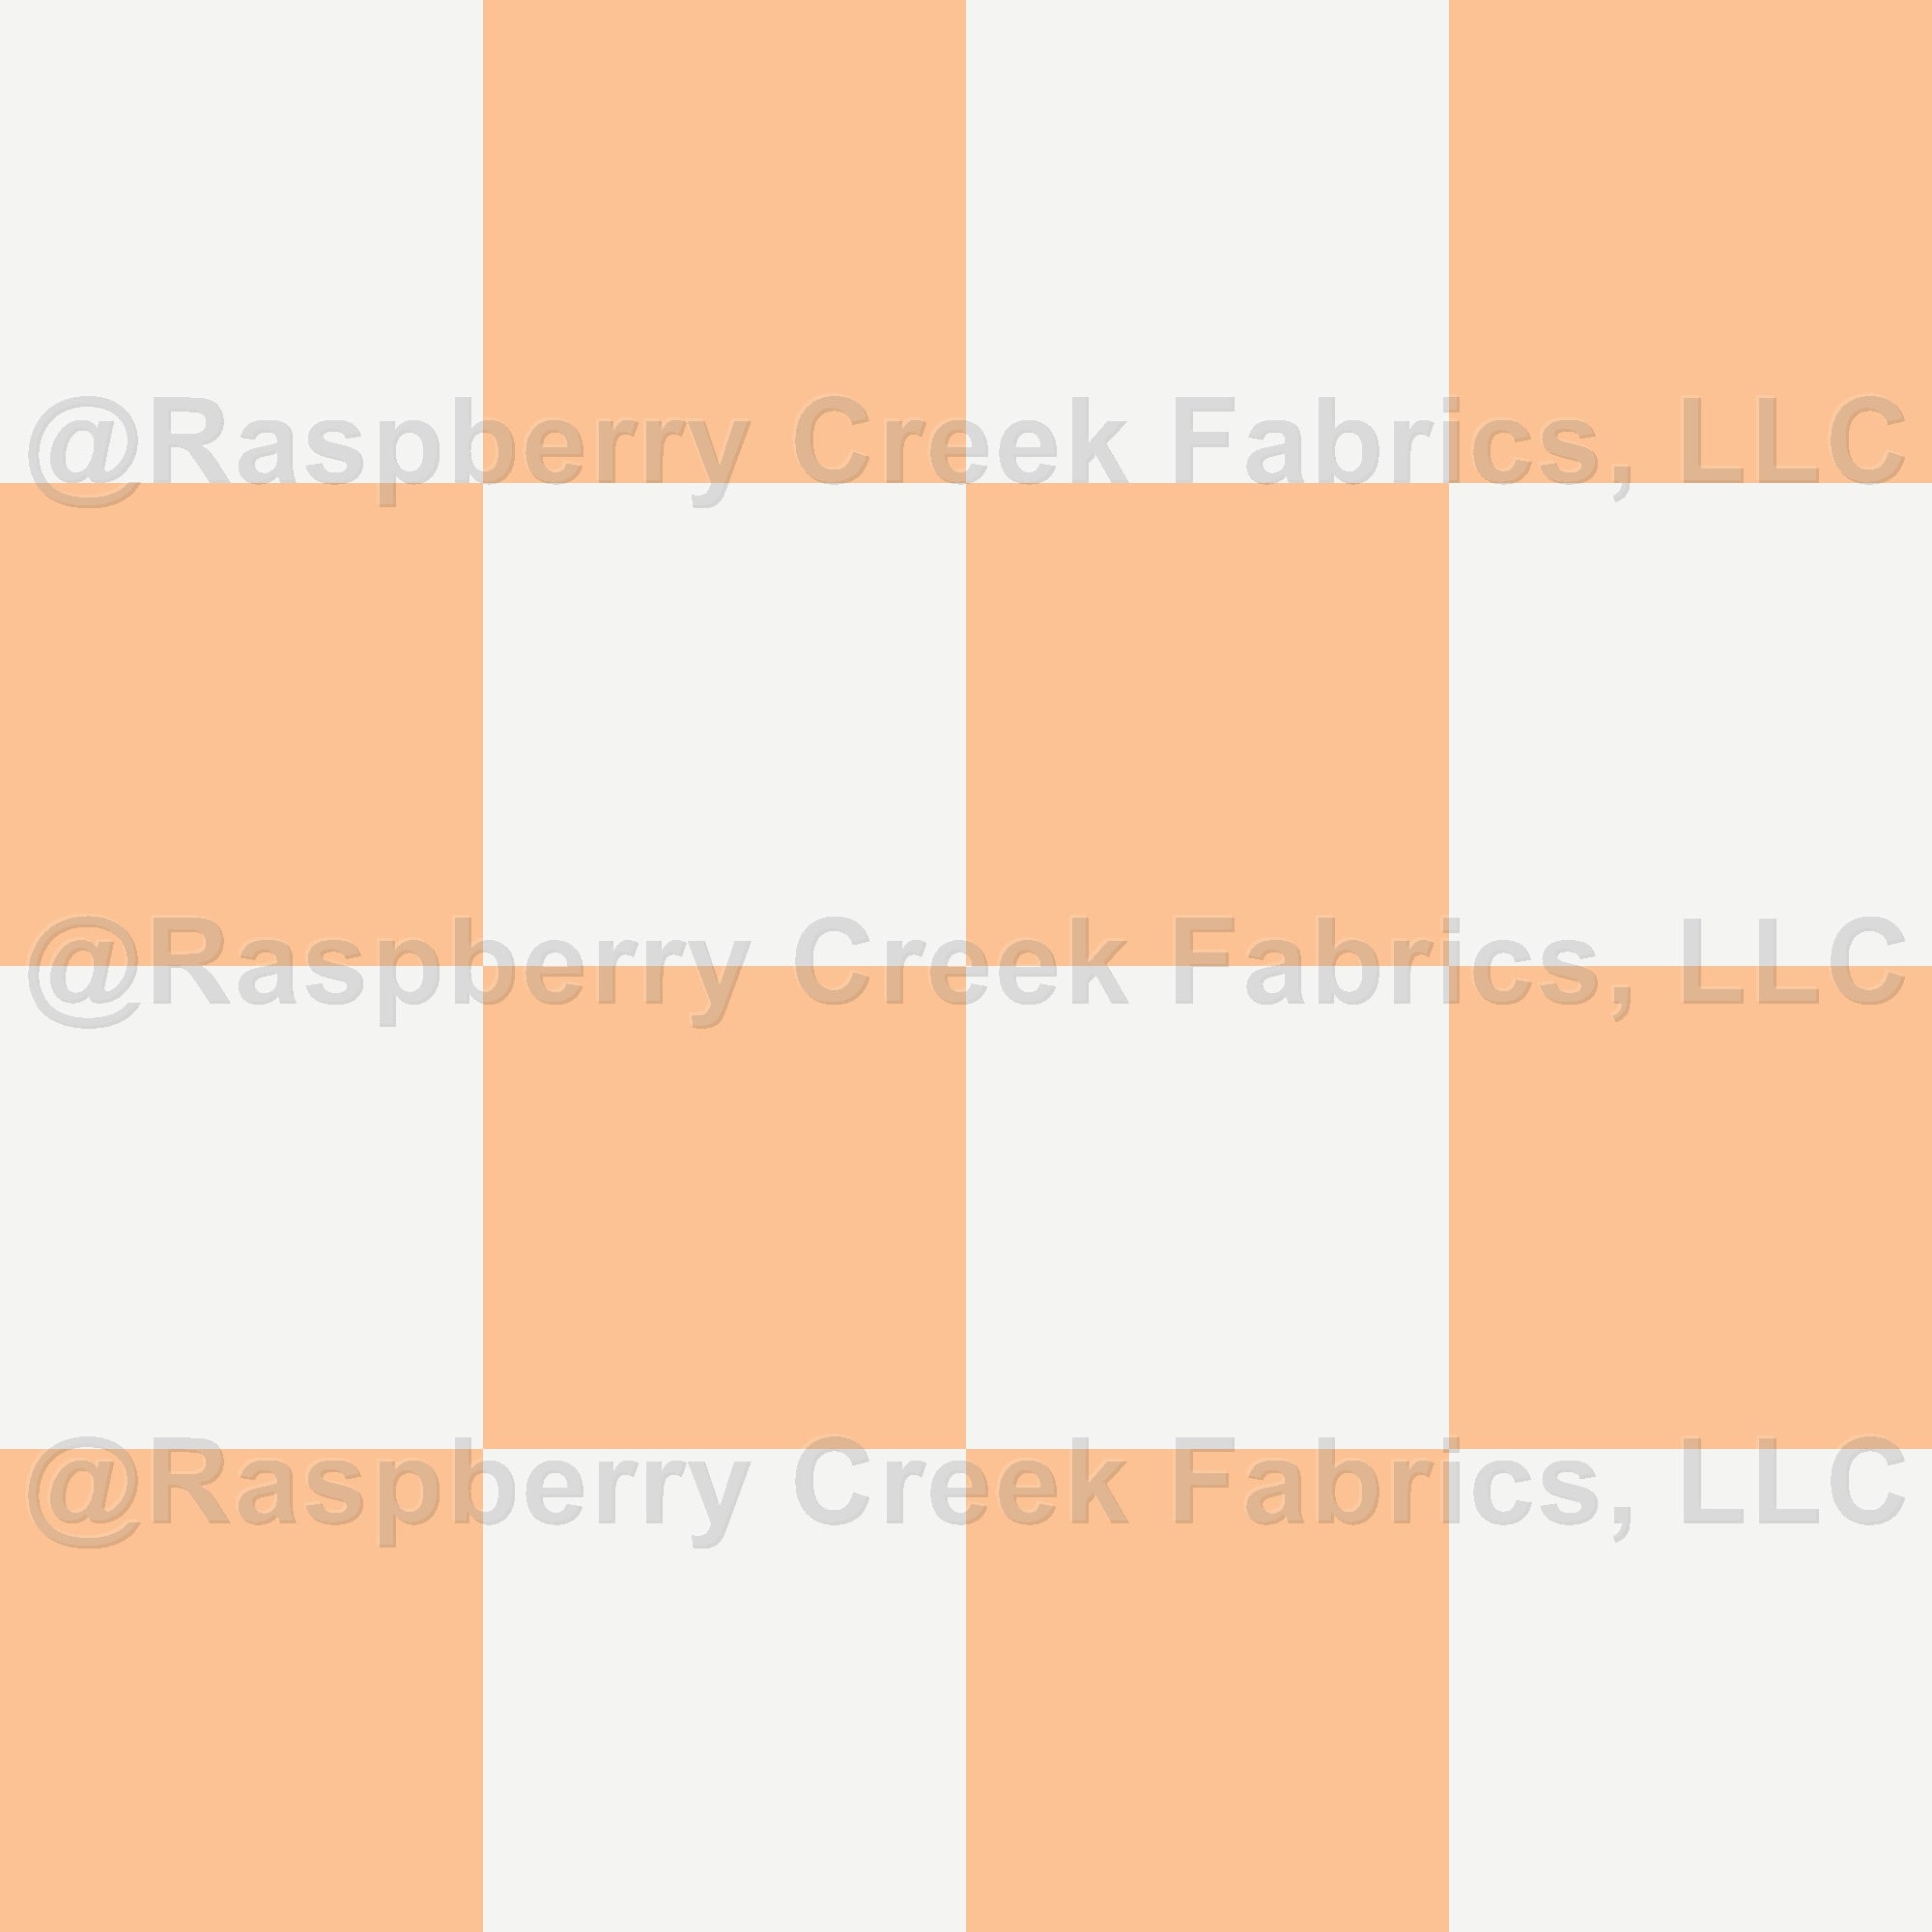 Peach Checkerboard Fabric, Raspberry Creek Fabrics, watermarked